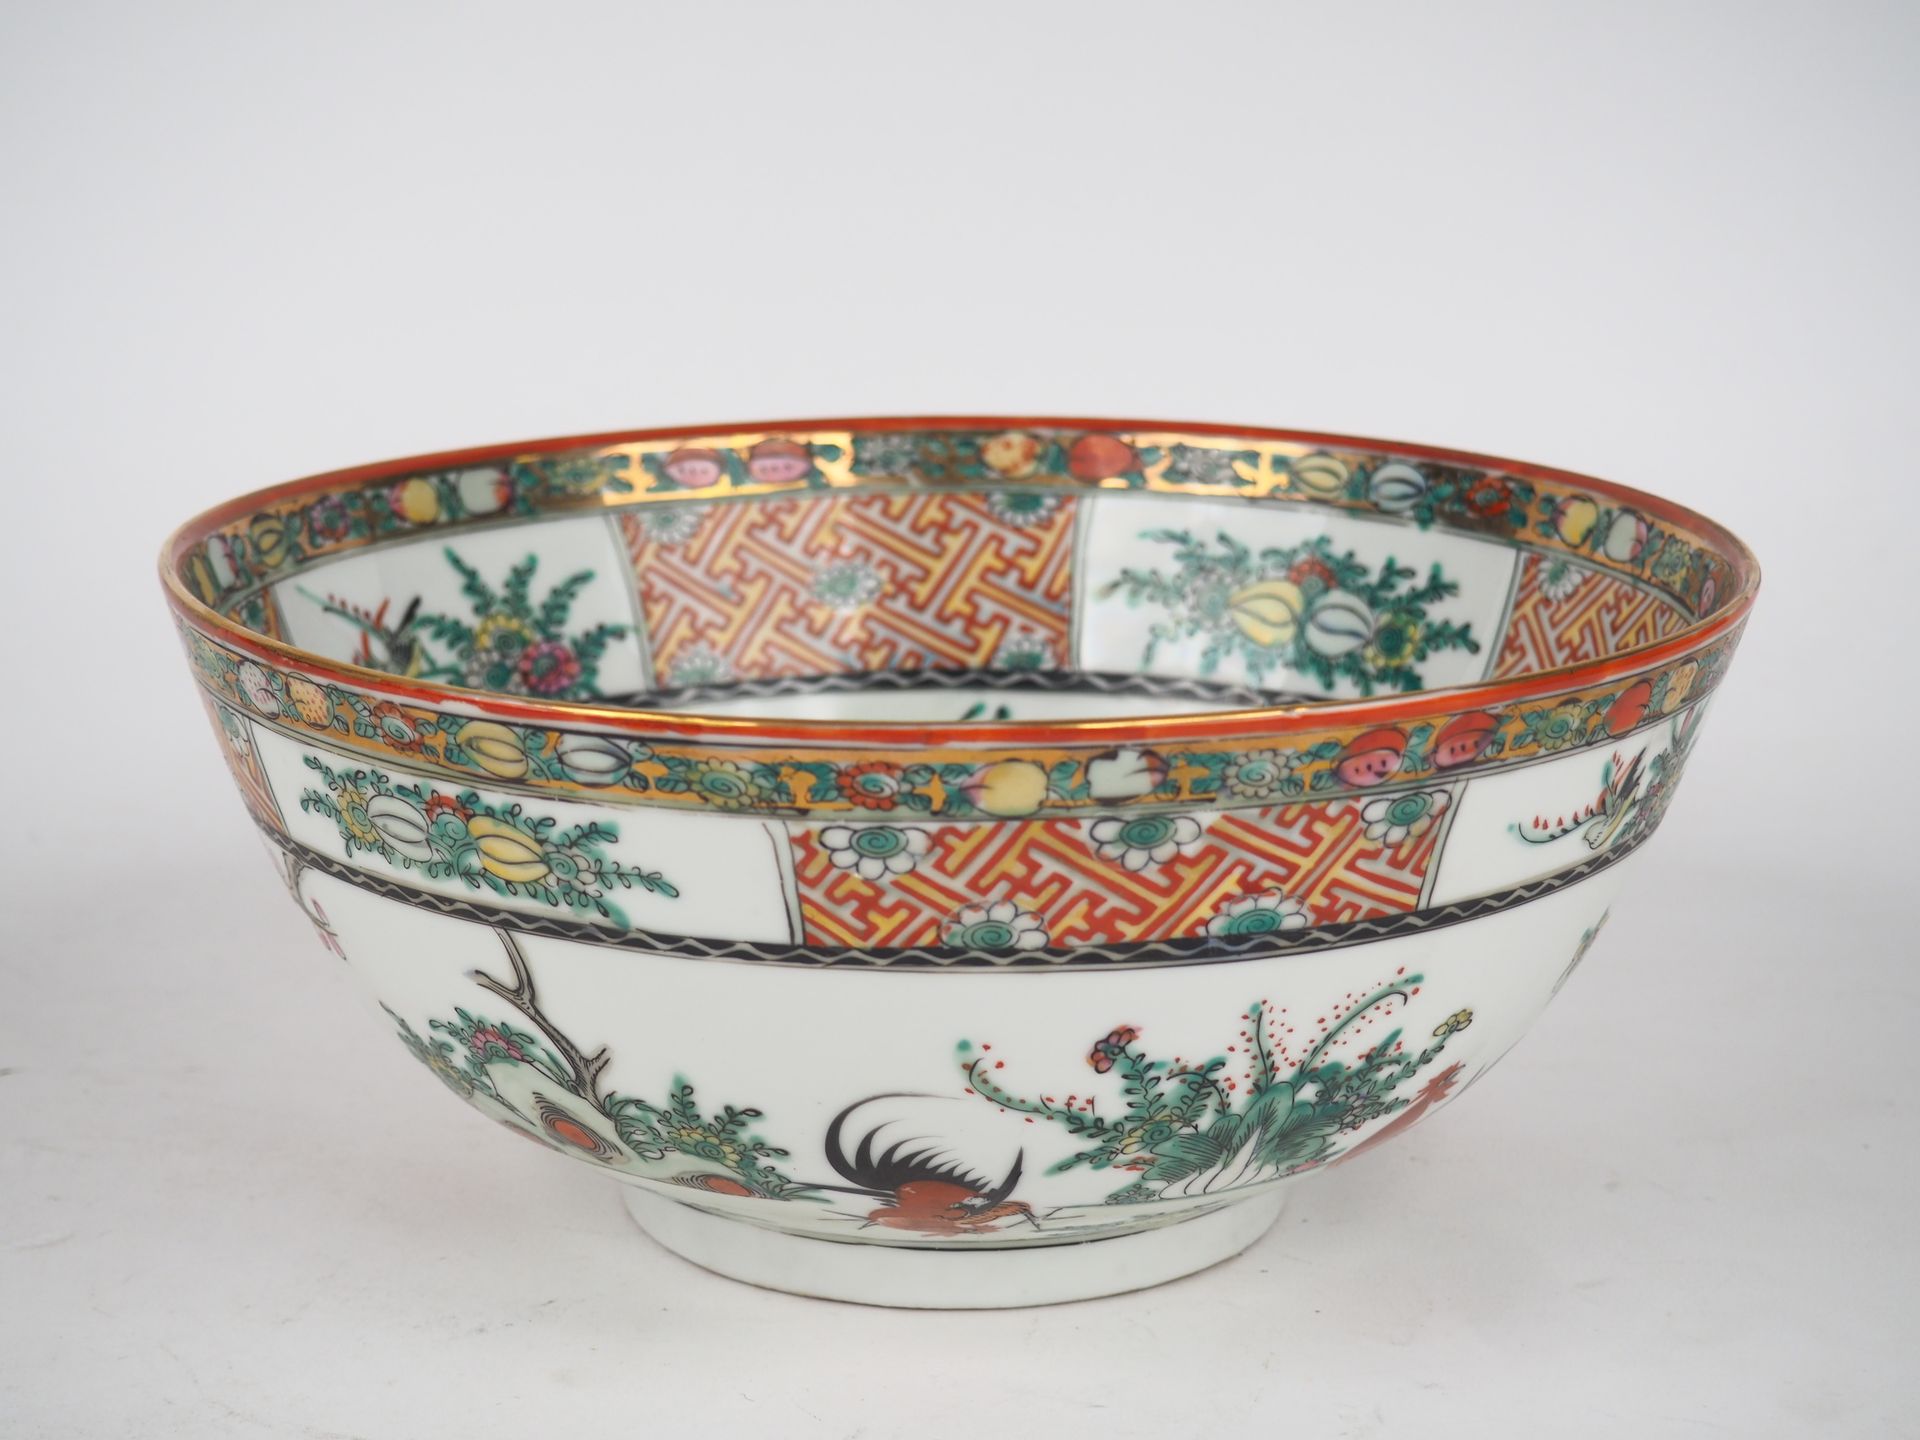 Null 中国青花瓷碗或杯的仿制品
直径25,5厘米